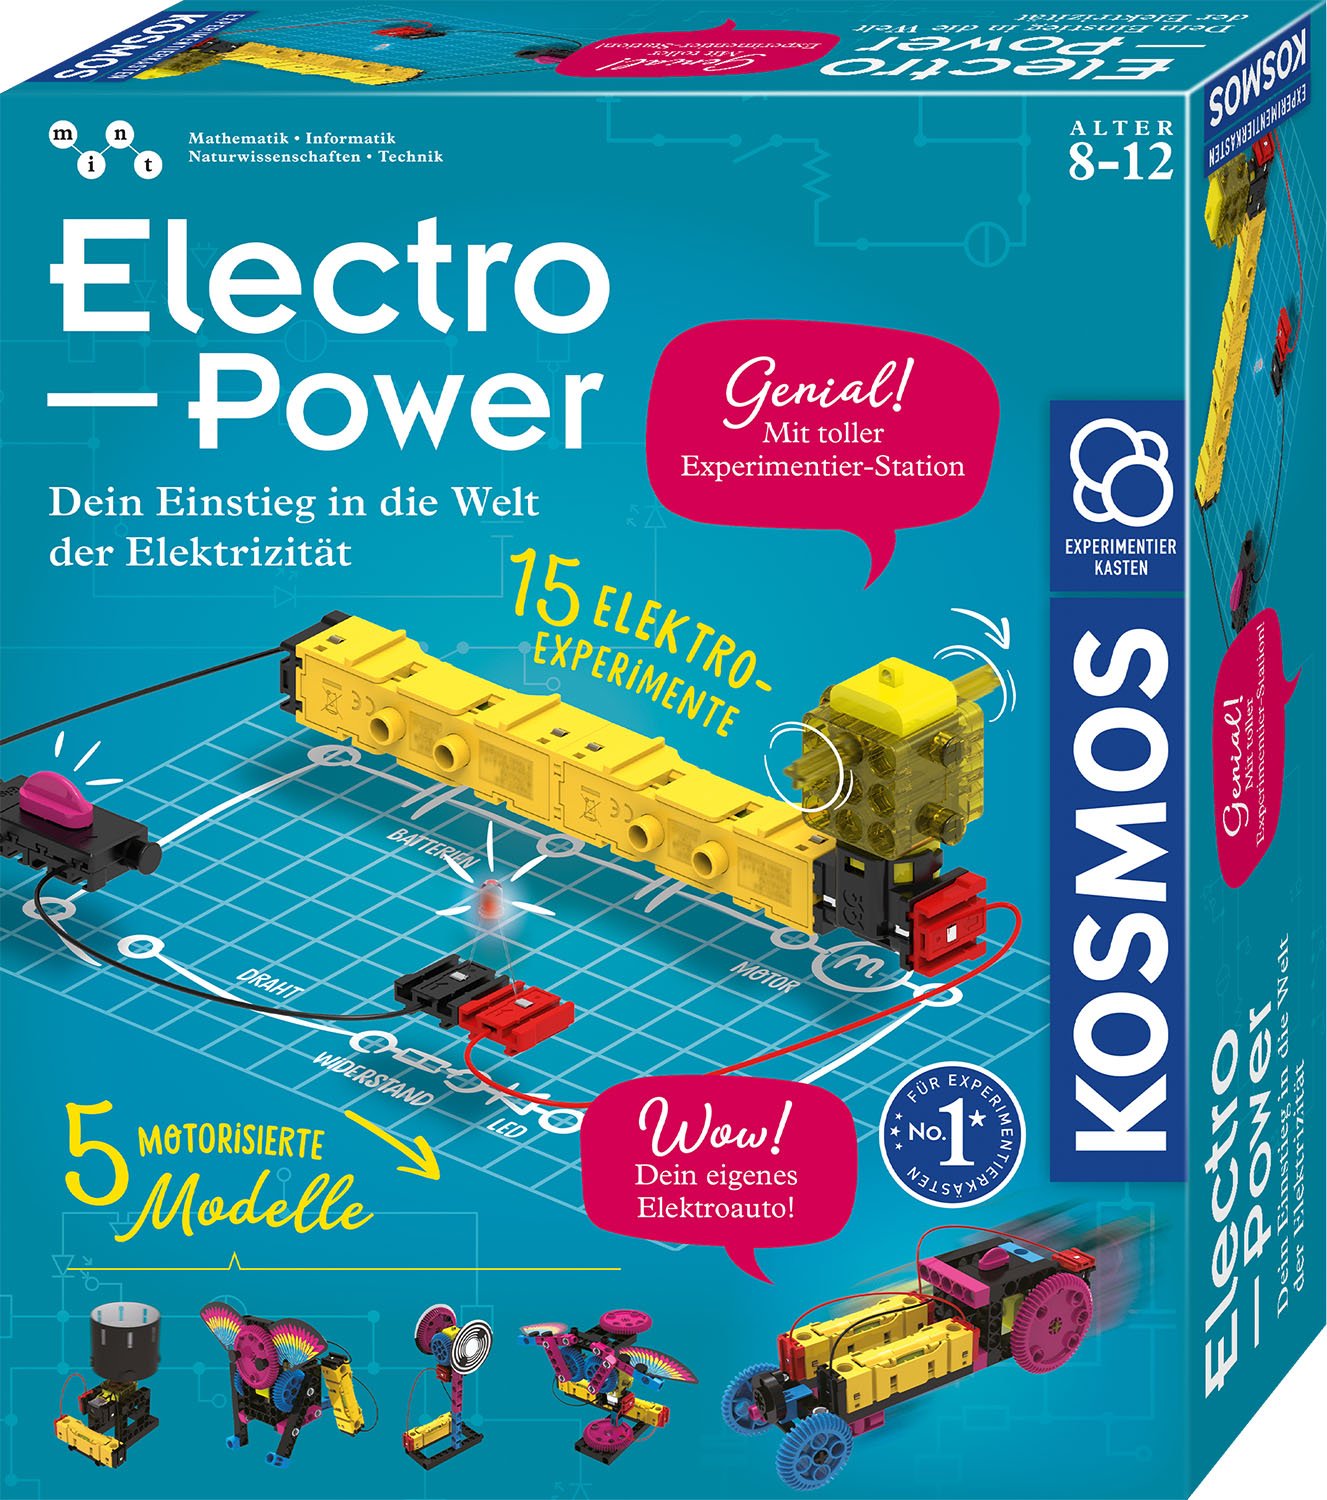 Electro Power